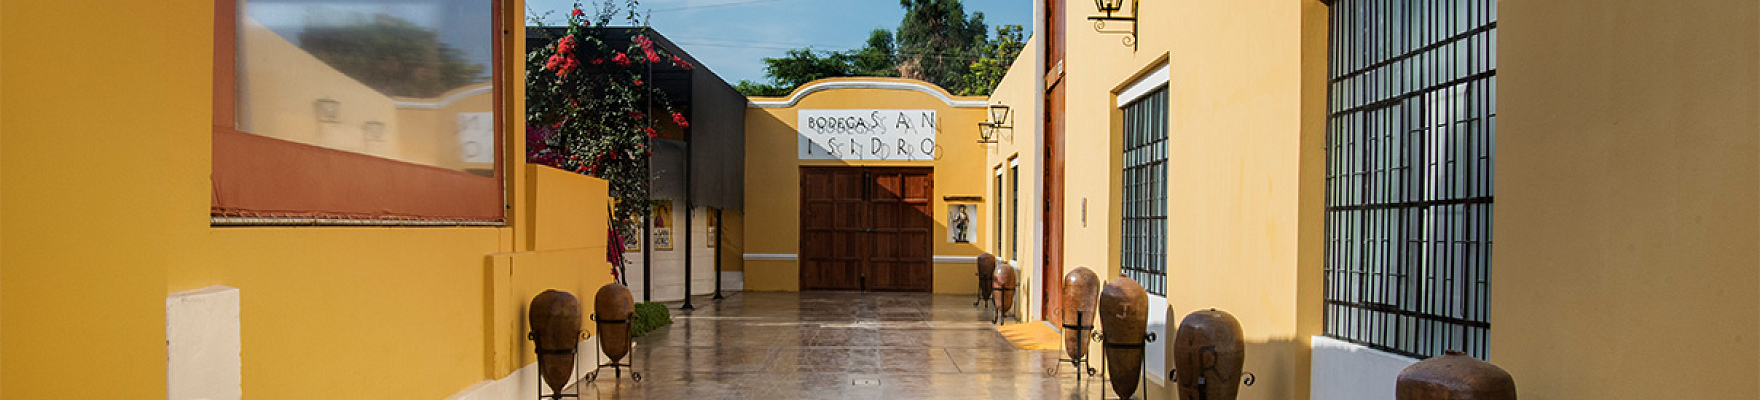 Bodega San Isidro